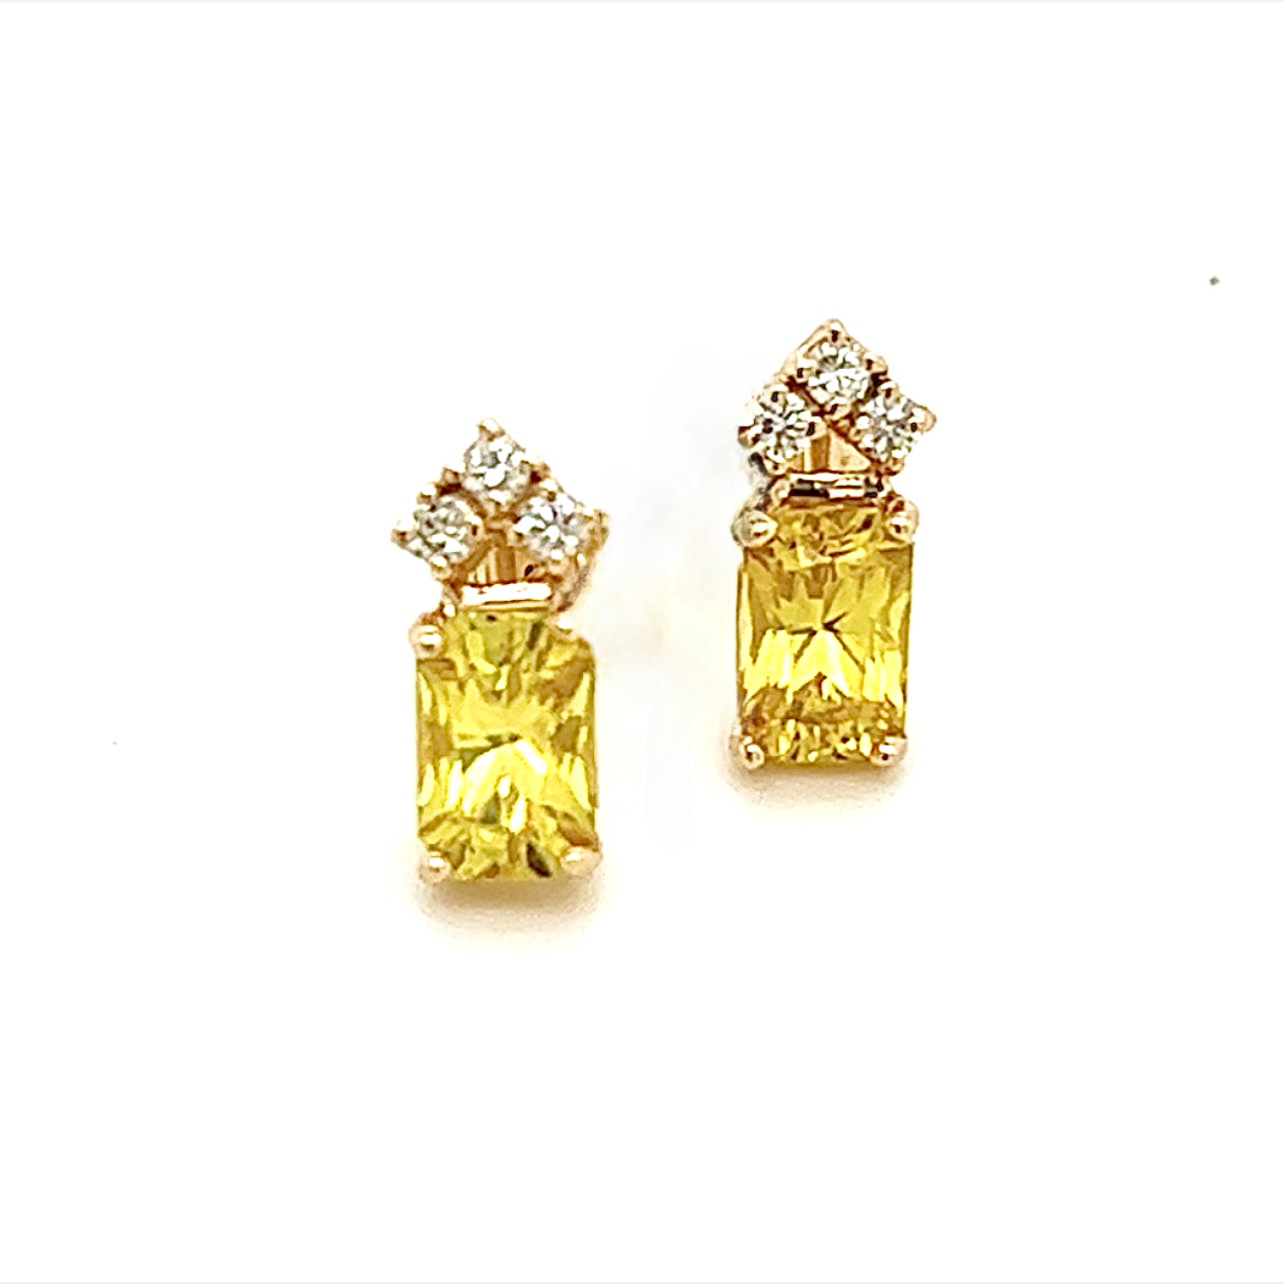 Natural Sapphire Diamond Earrings 14k Gold 1.74 TCW Certified $1,590 121260